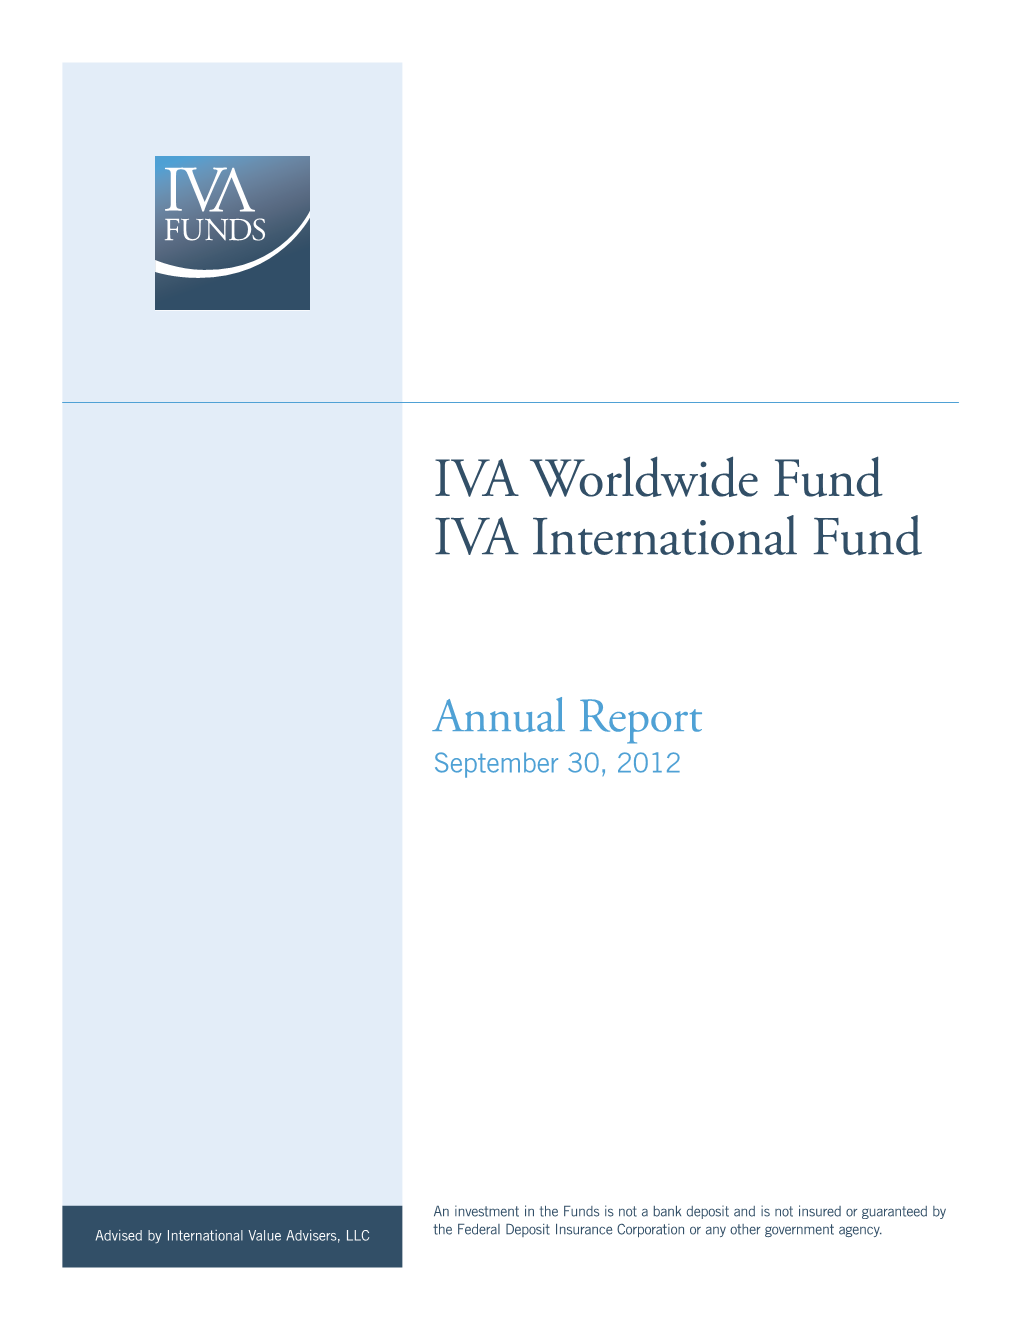 IVA Worldwide Fund IVA International Fund